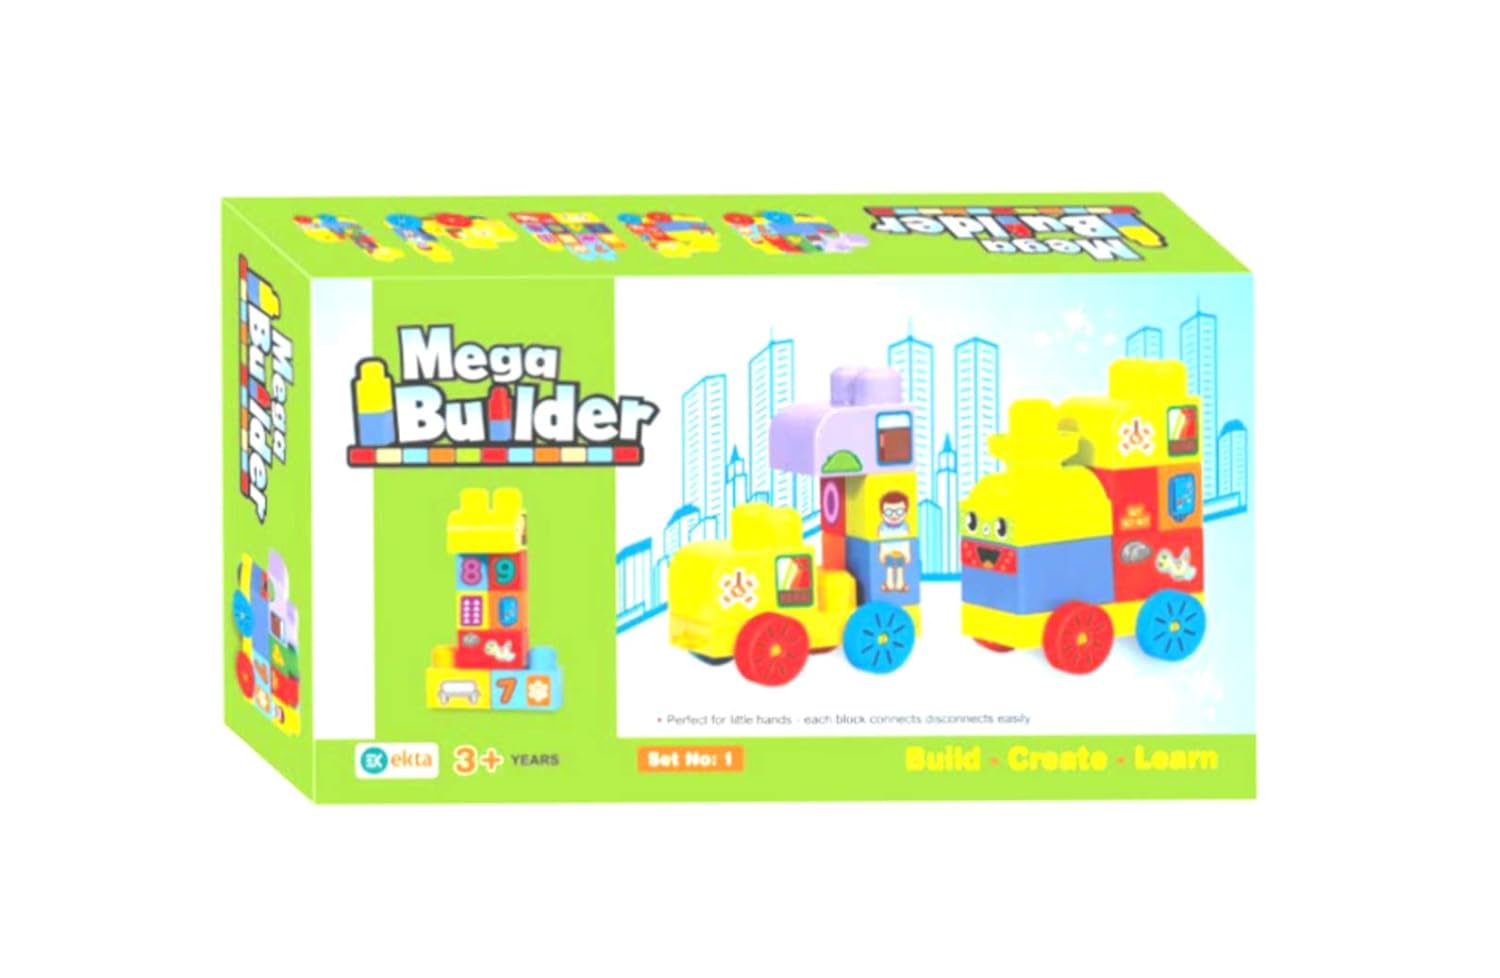 Ekta Mega Builder - Multi-Color Block Buliding Game For Kids | A Creative Game